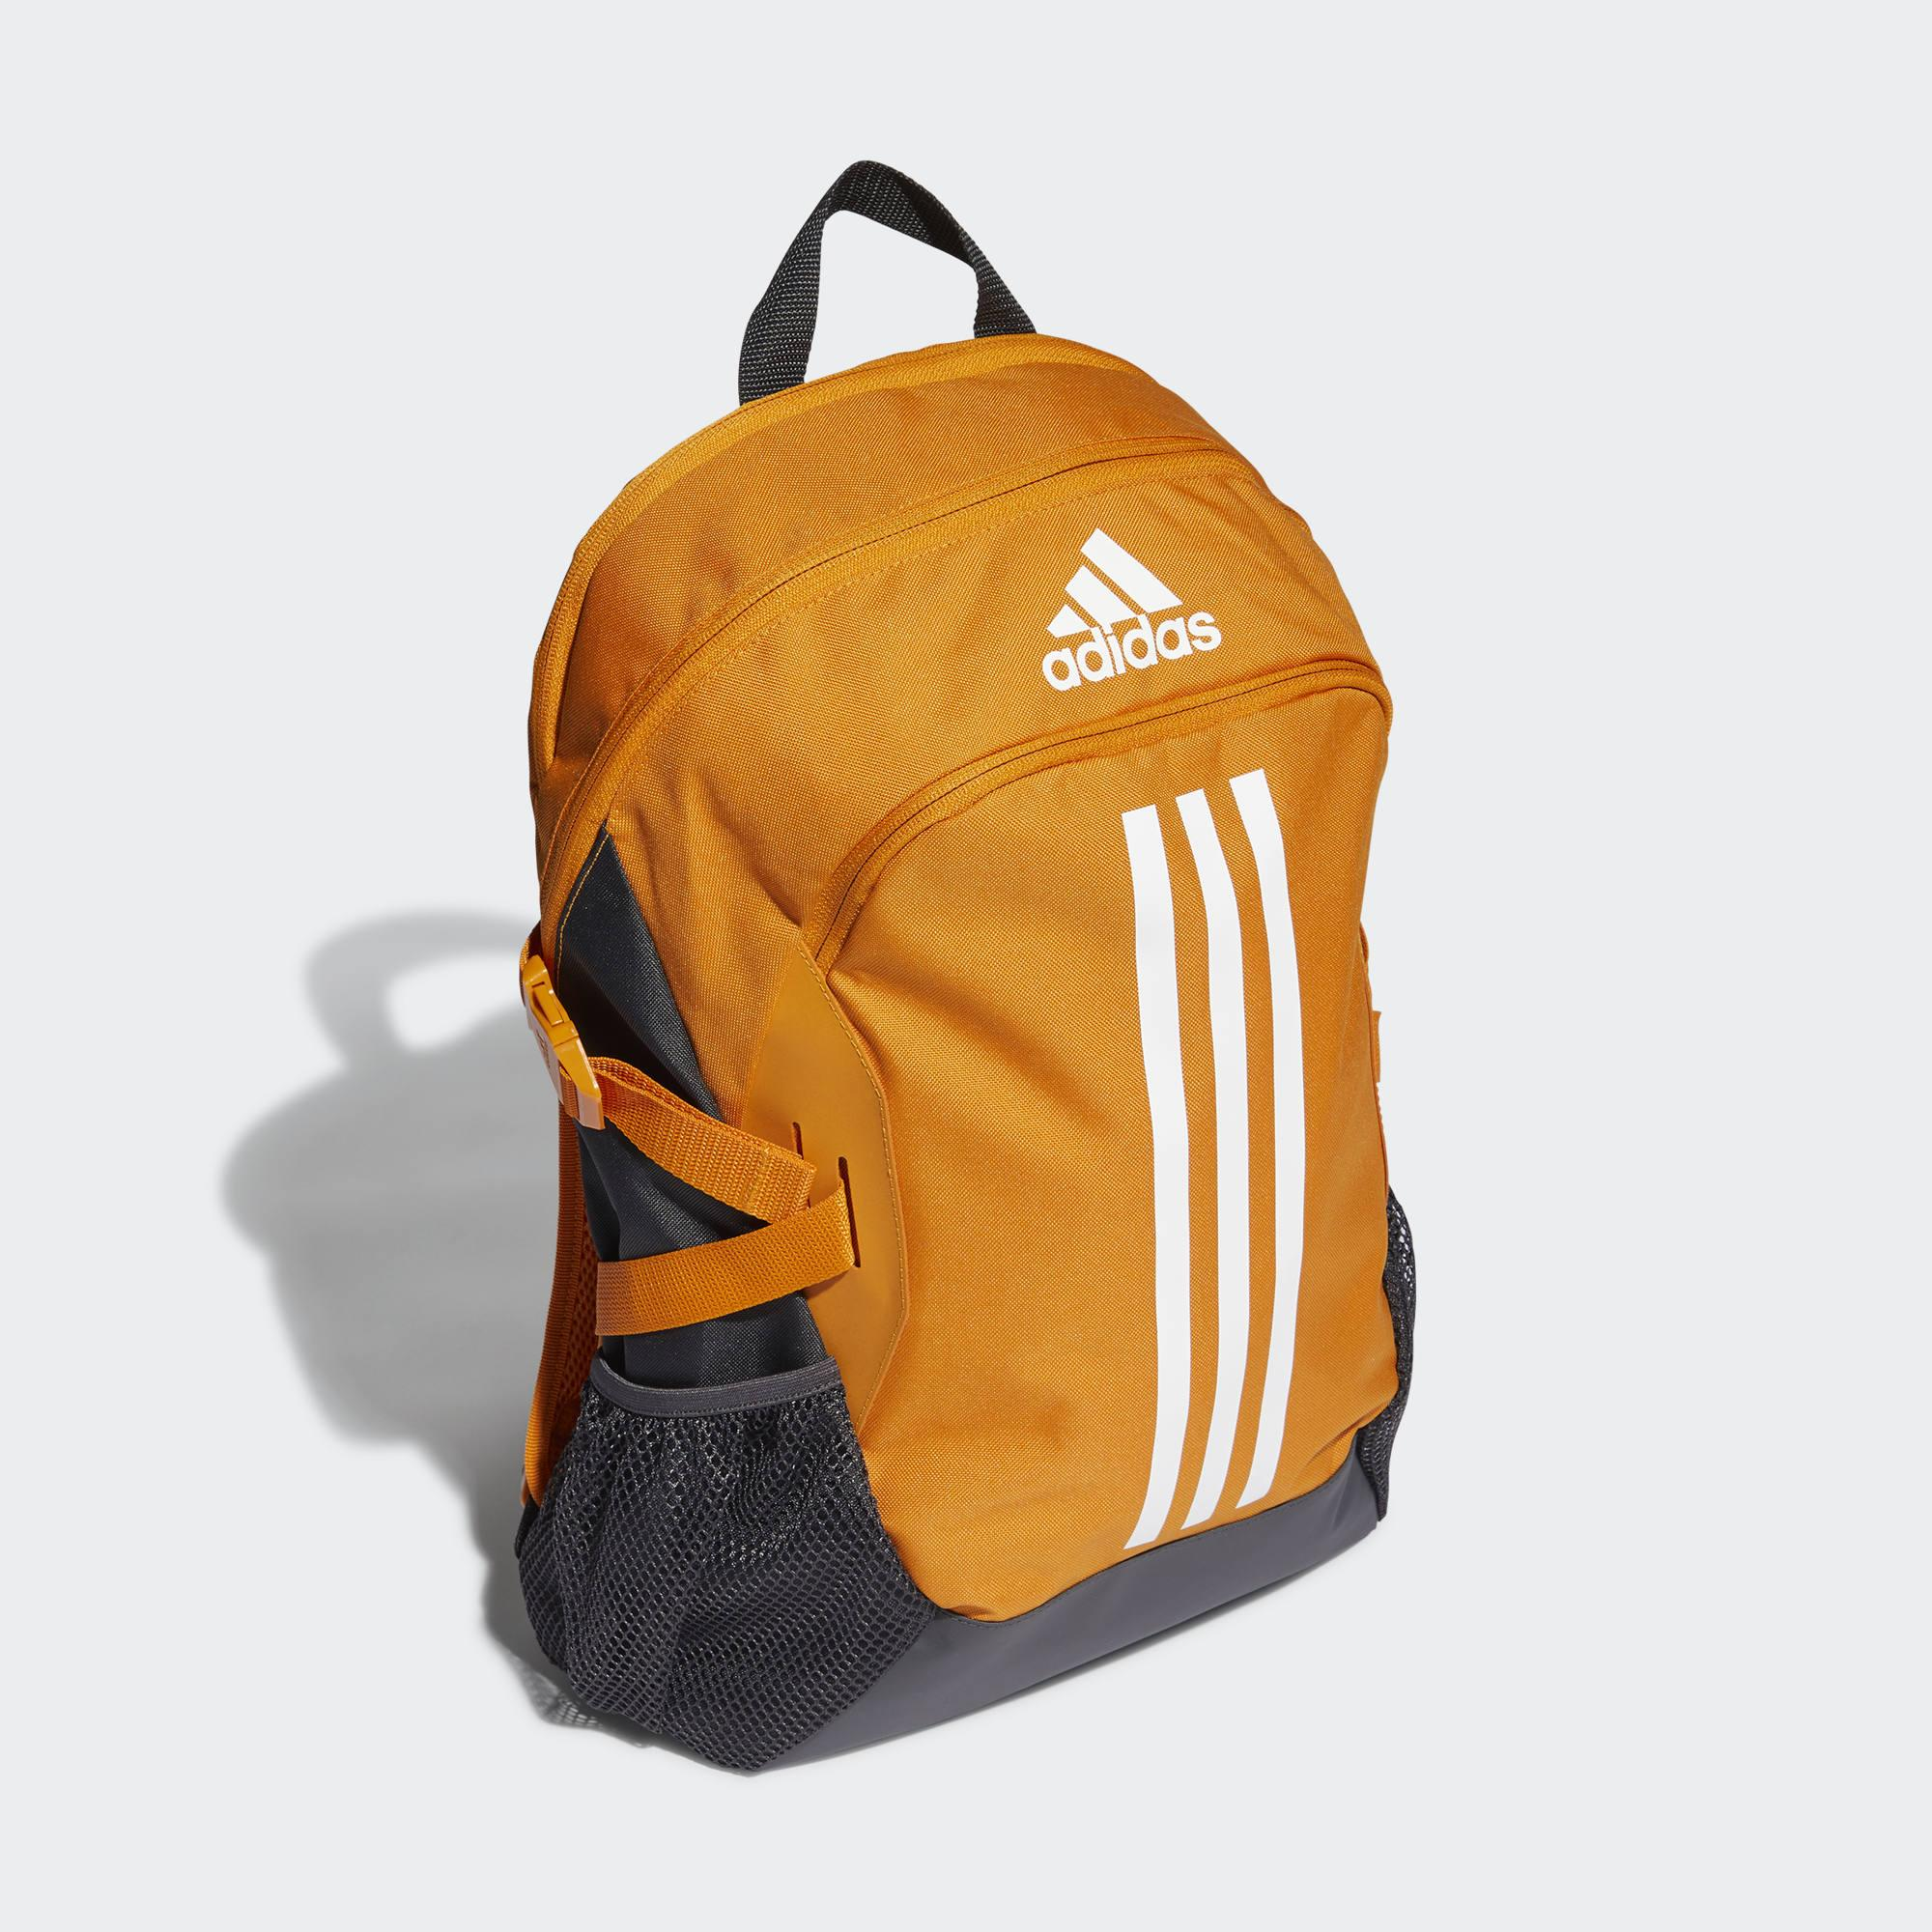 Mua Balo Mini Adidas Originals Backpack GD1644 Màu Hồng Phấn - Adidas - Mua  tại Vua Hàng Hiệu h053202